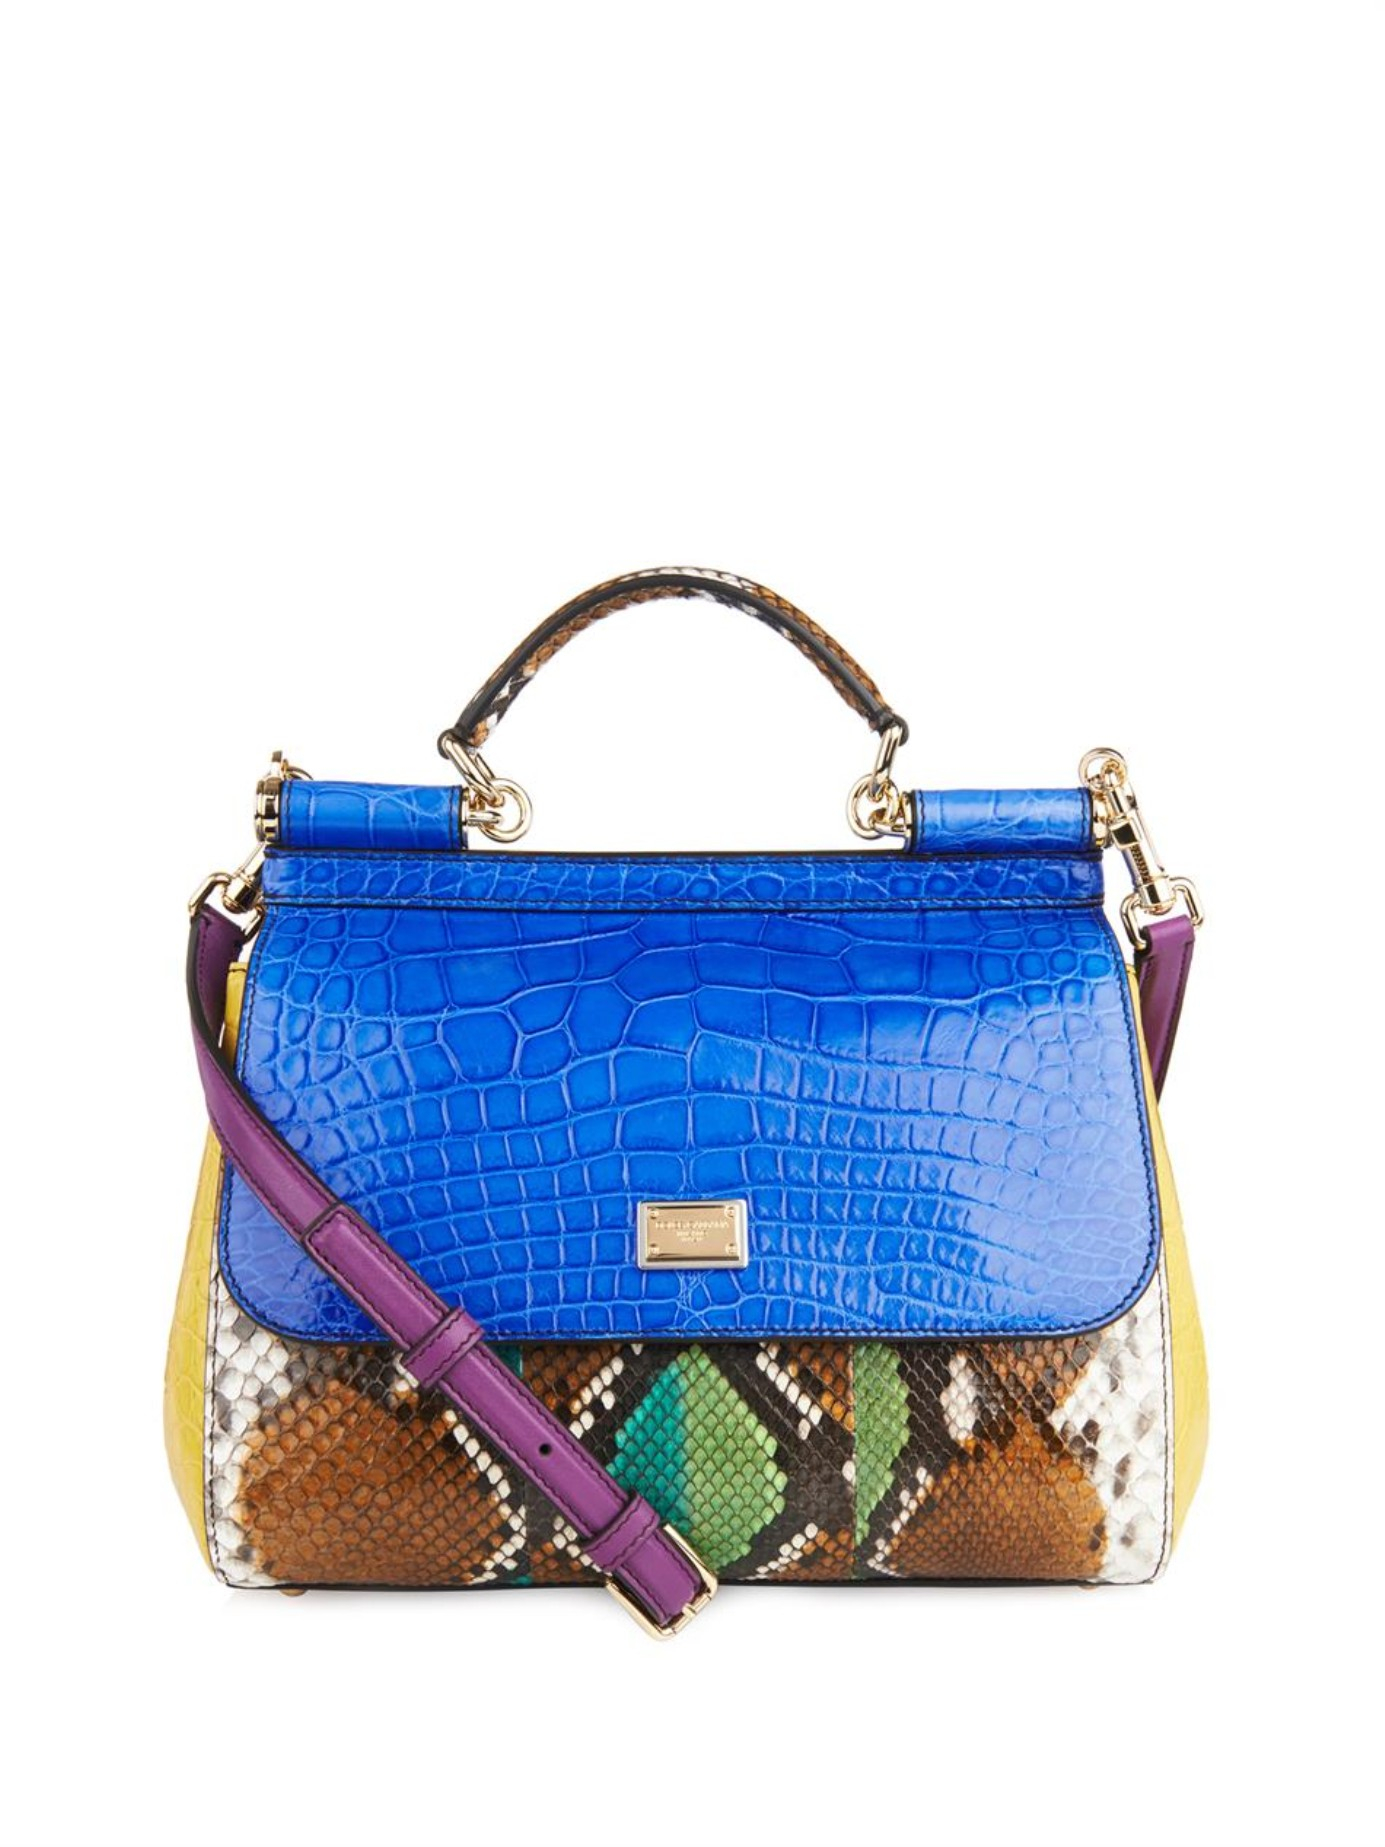 Dolce & Gabbana Sicily Crocodile and Snake Cross-Body Bag in Blue